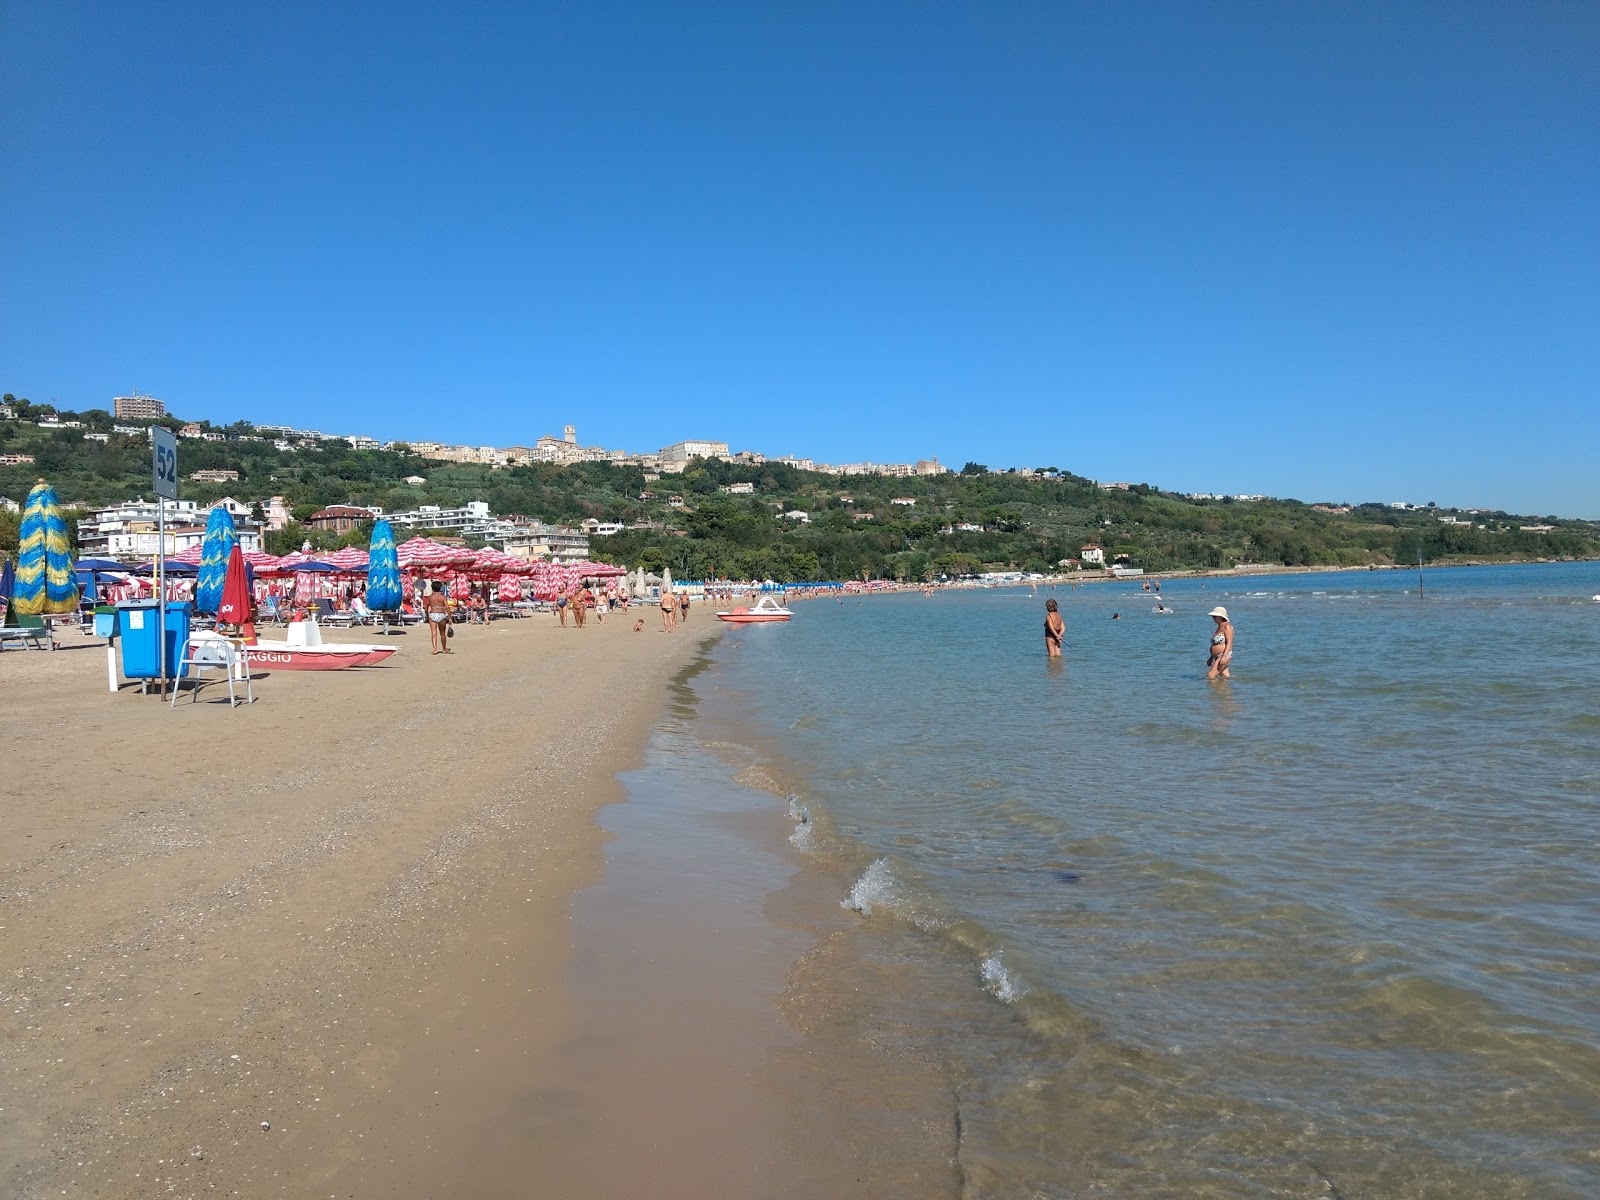 Foto de Spiaggia di Vasto Marina área de resort de praia